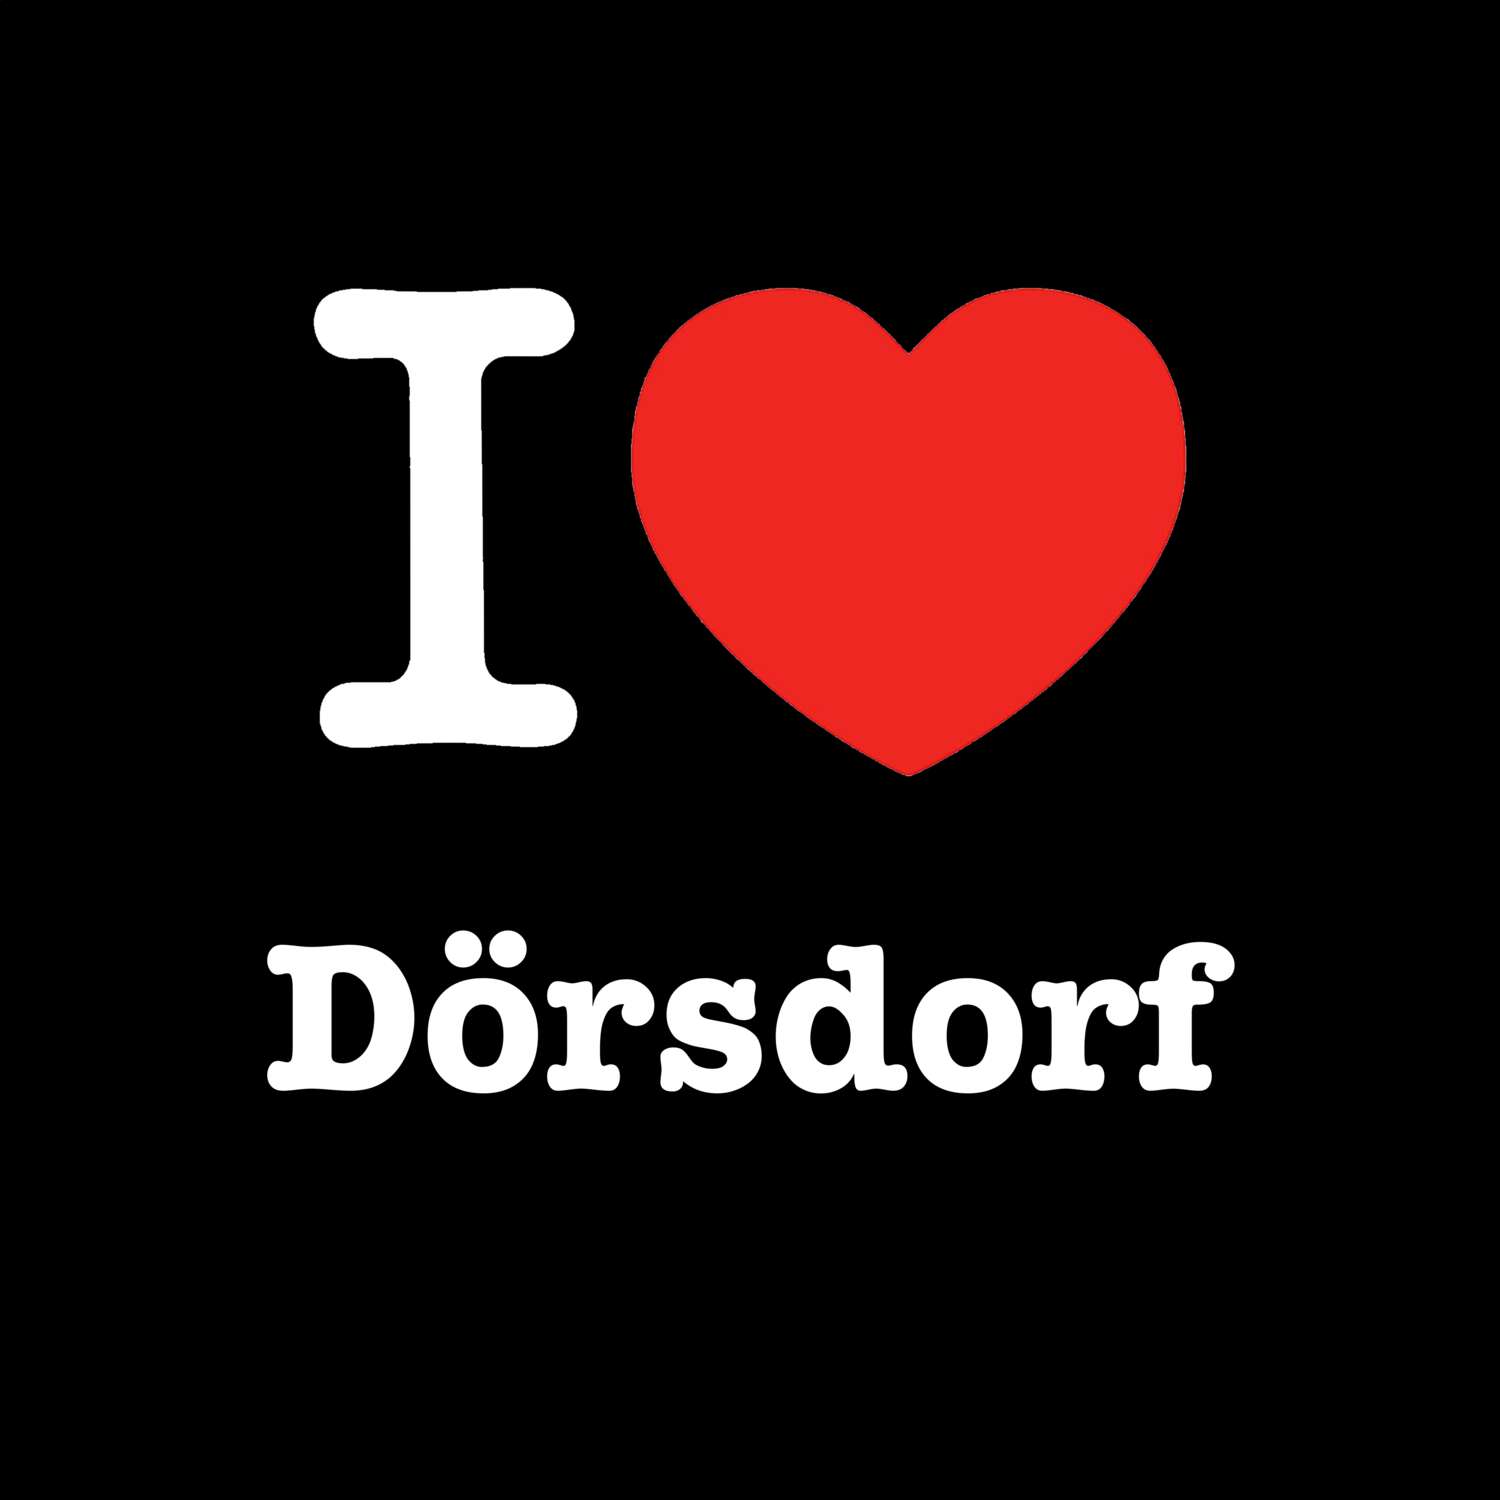 Dörsdorf T-Shirt »I love«